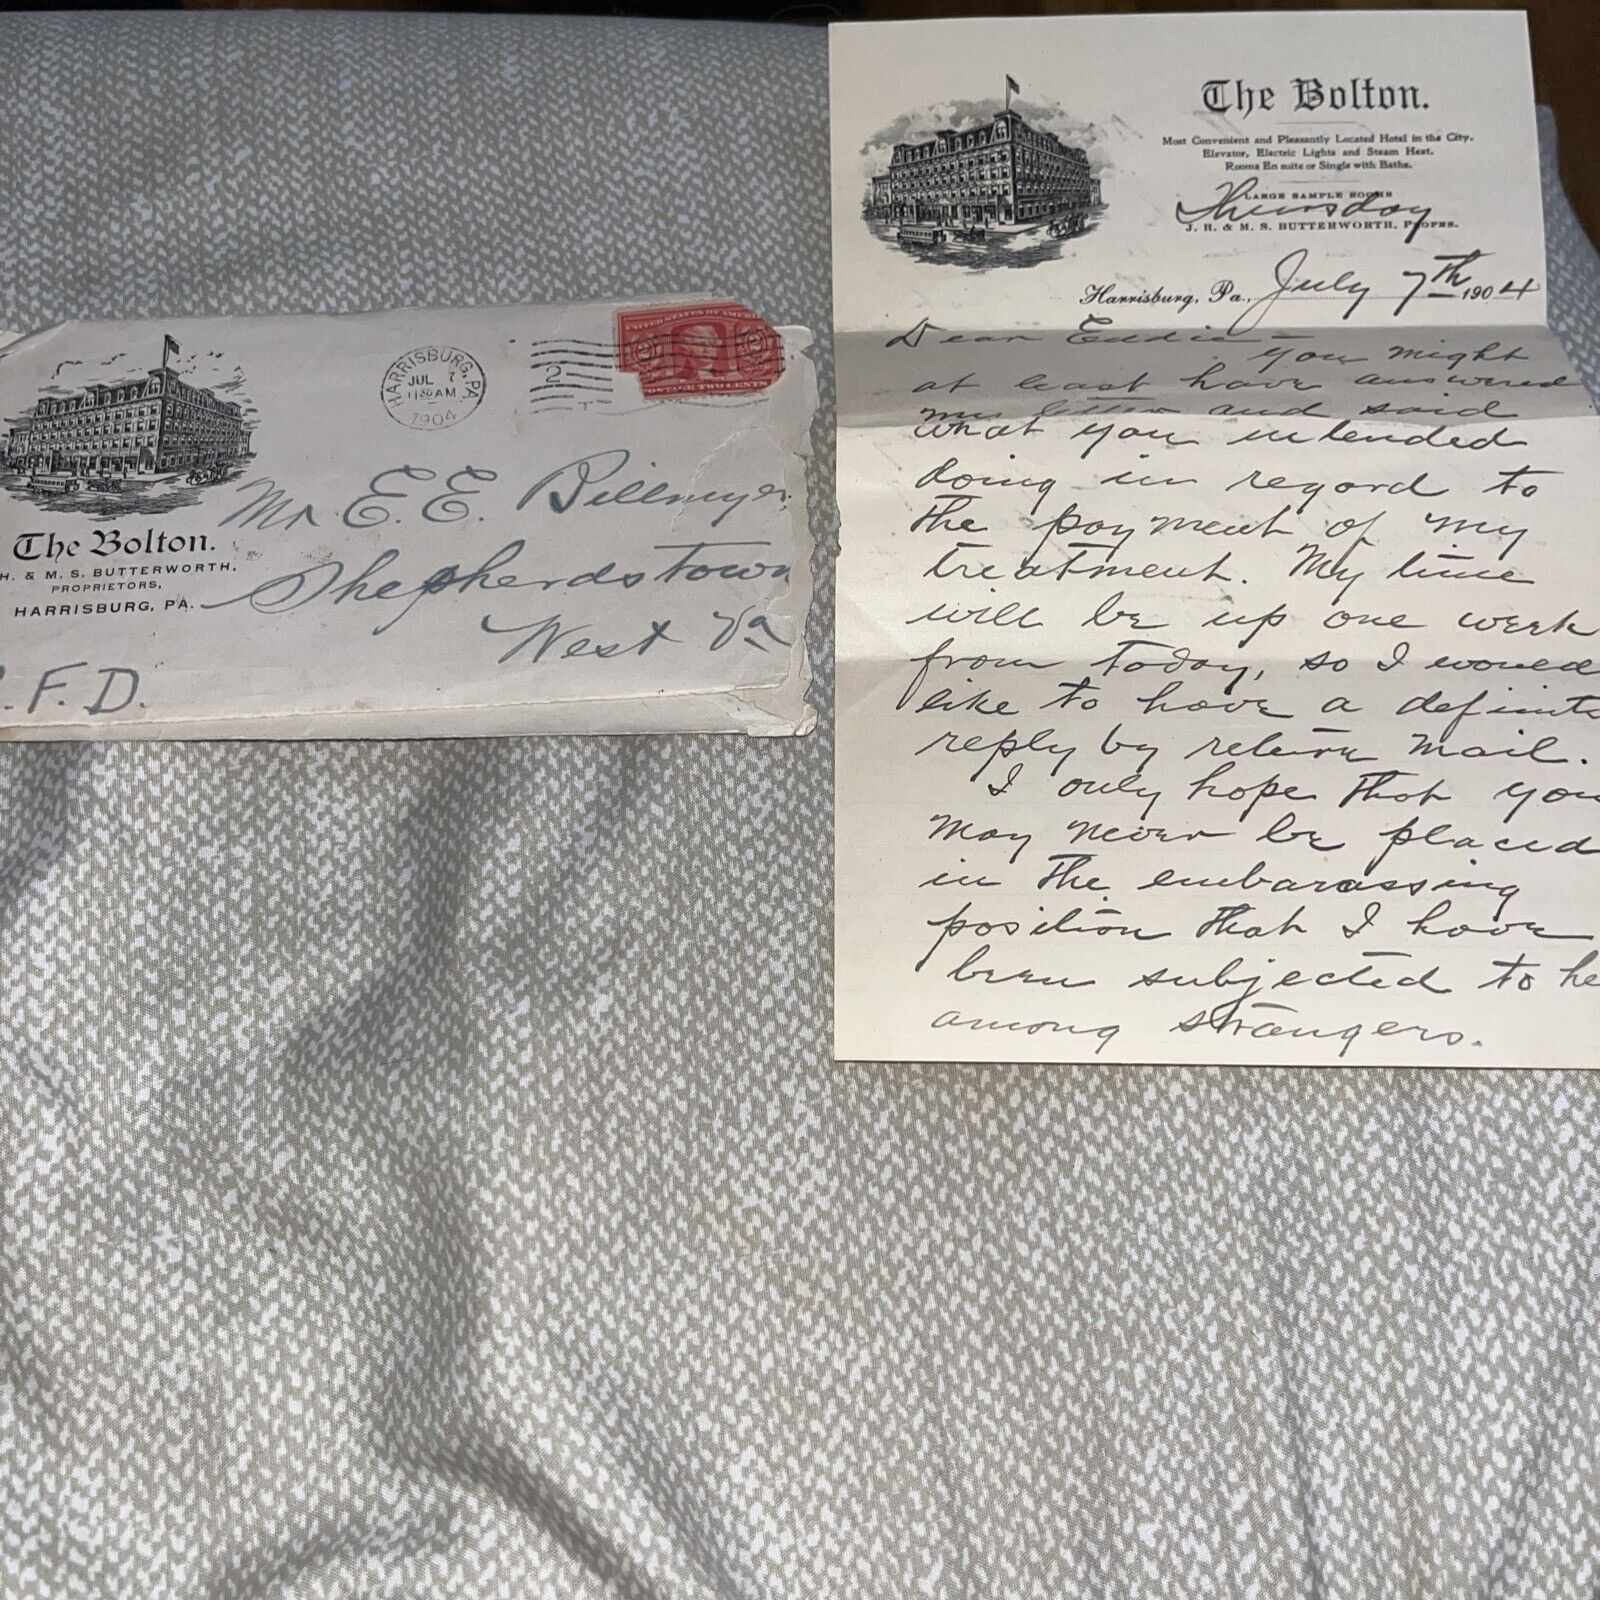 Antique 1904 Letter The Bolton Hotel Letterhead Harrisburg PA Pennsylvania